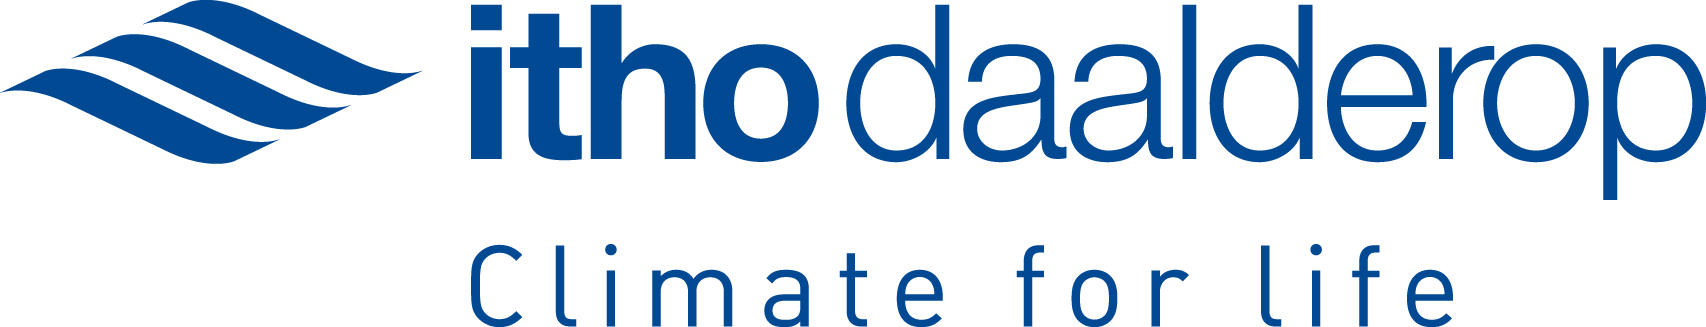 IthoDaalderop logo.png